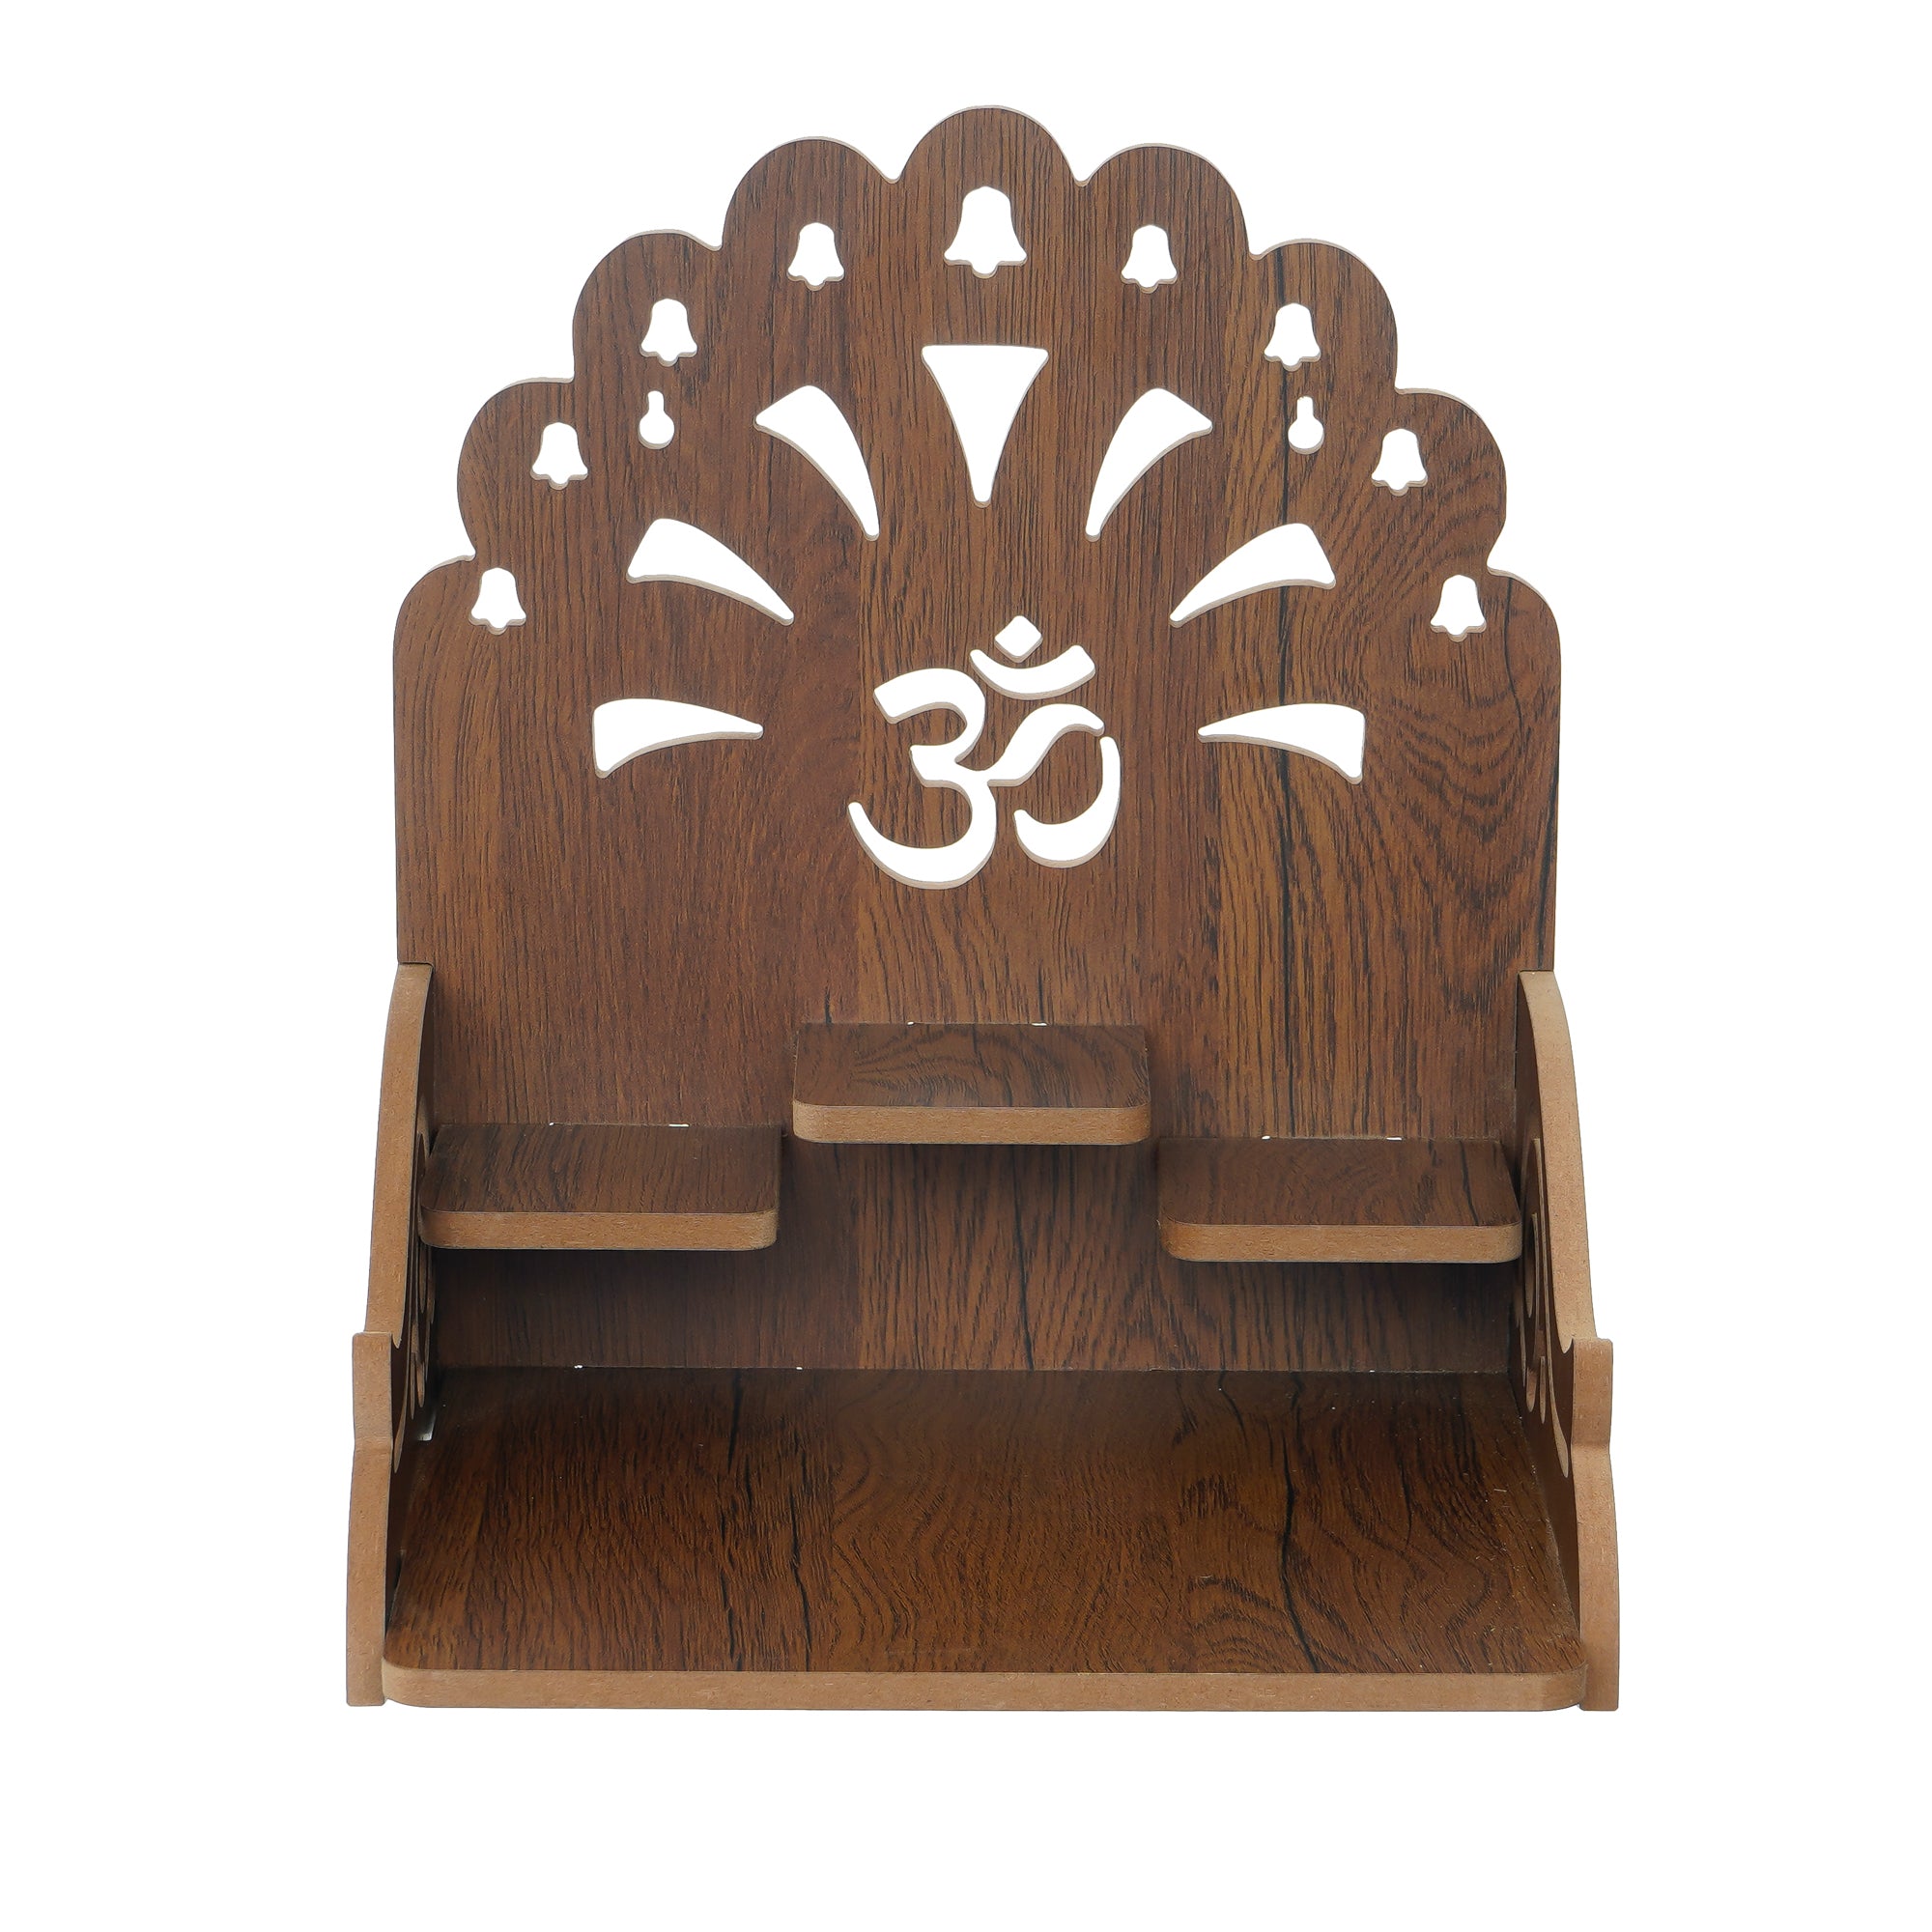 Om with Bells Design and 3 Shelfs Laminated Wood Pooja Temple/Mandir 5